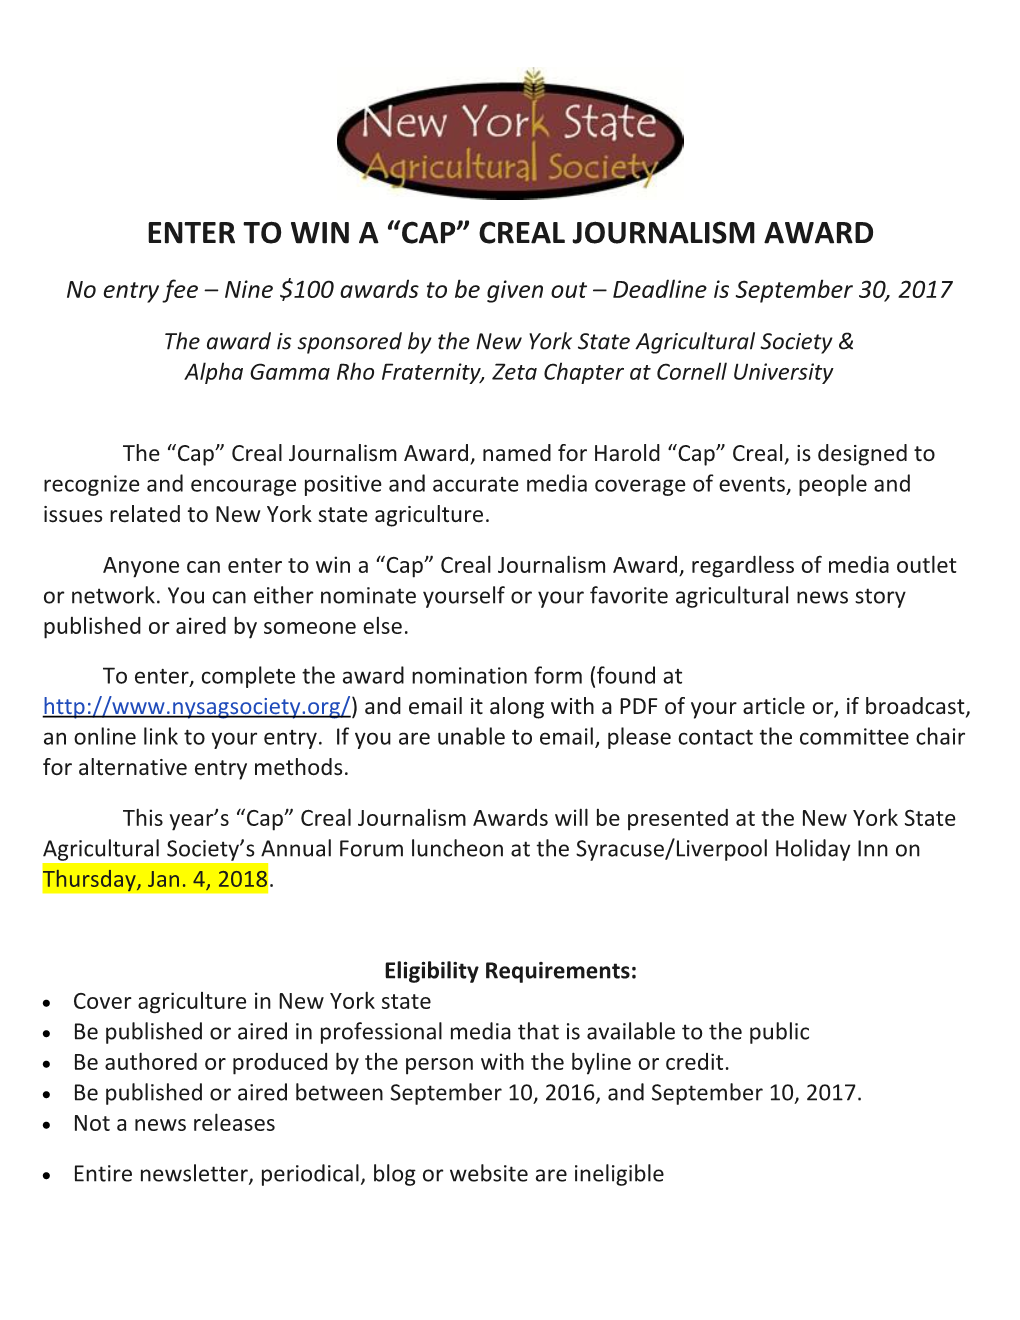 Enter to Win a Cap Creal Journalism Award